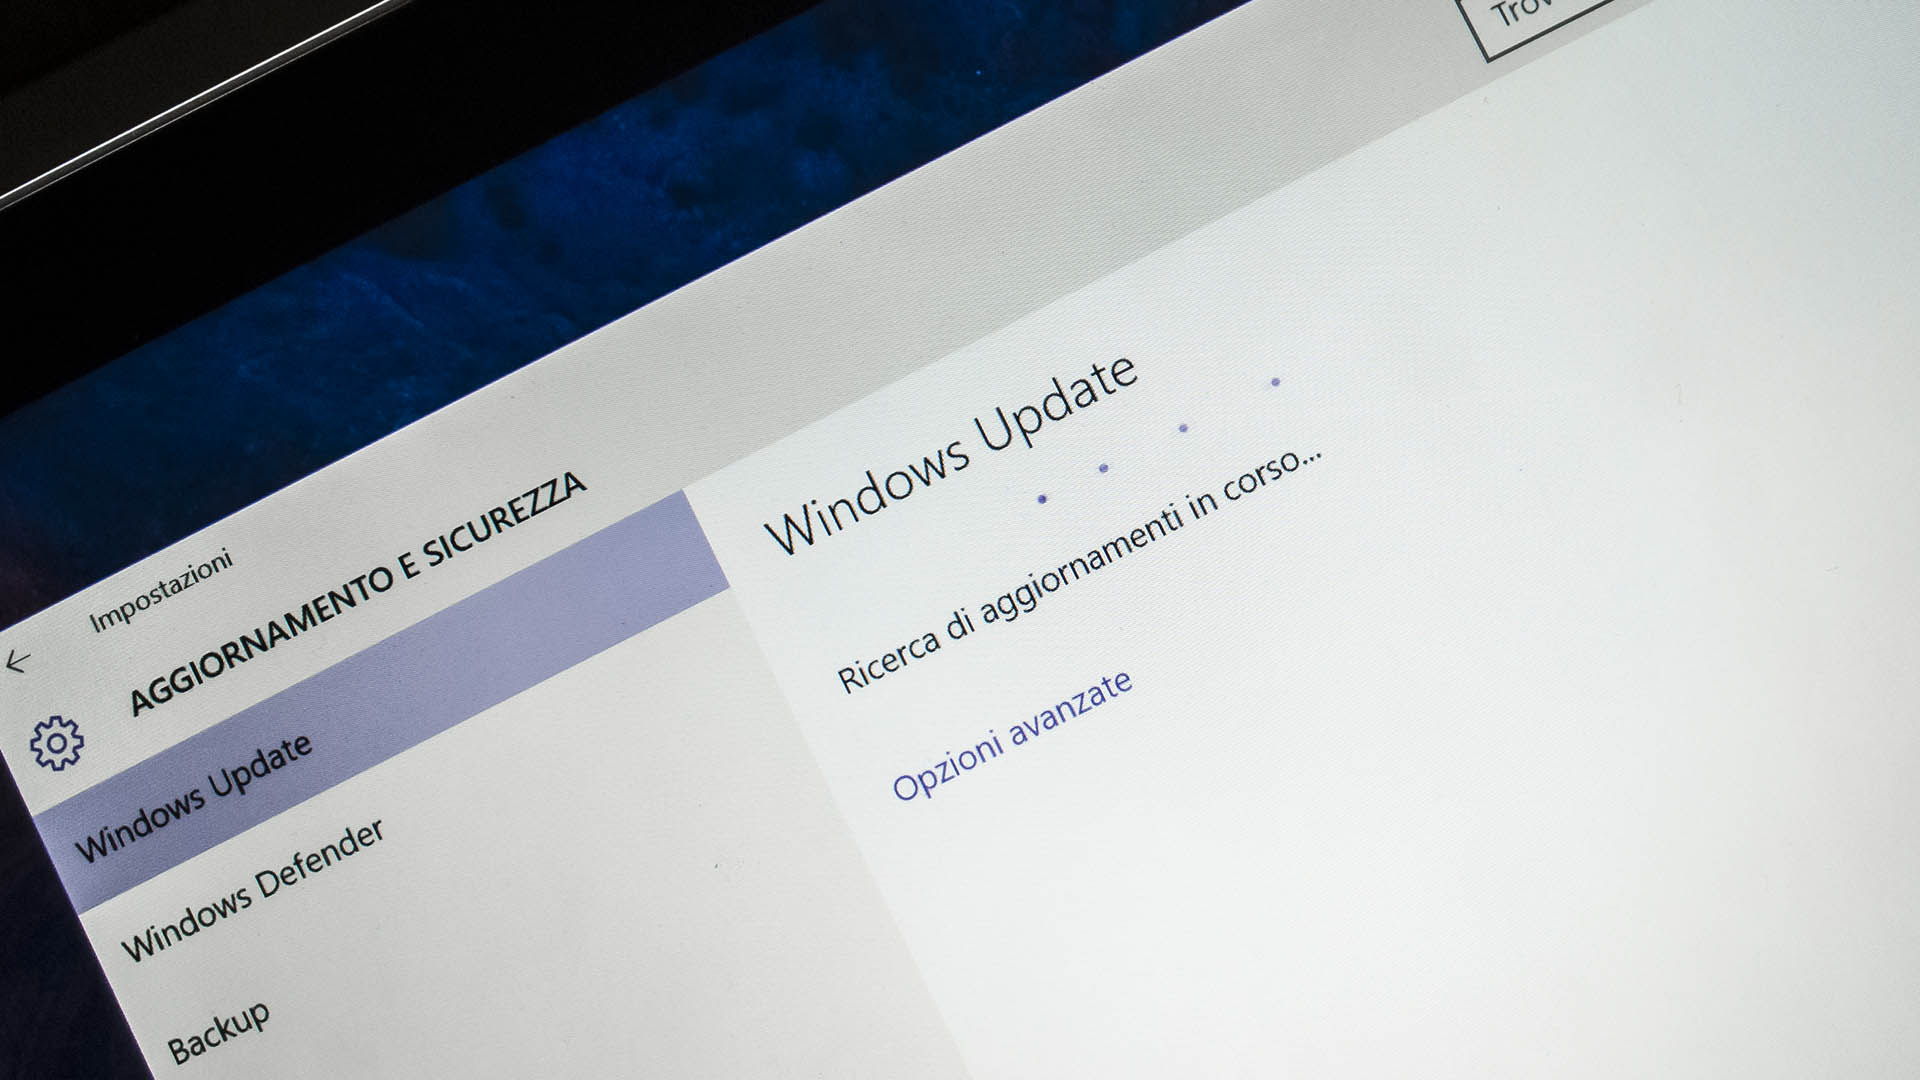 Windows Update Windows 10 quindicesima patch